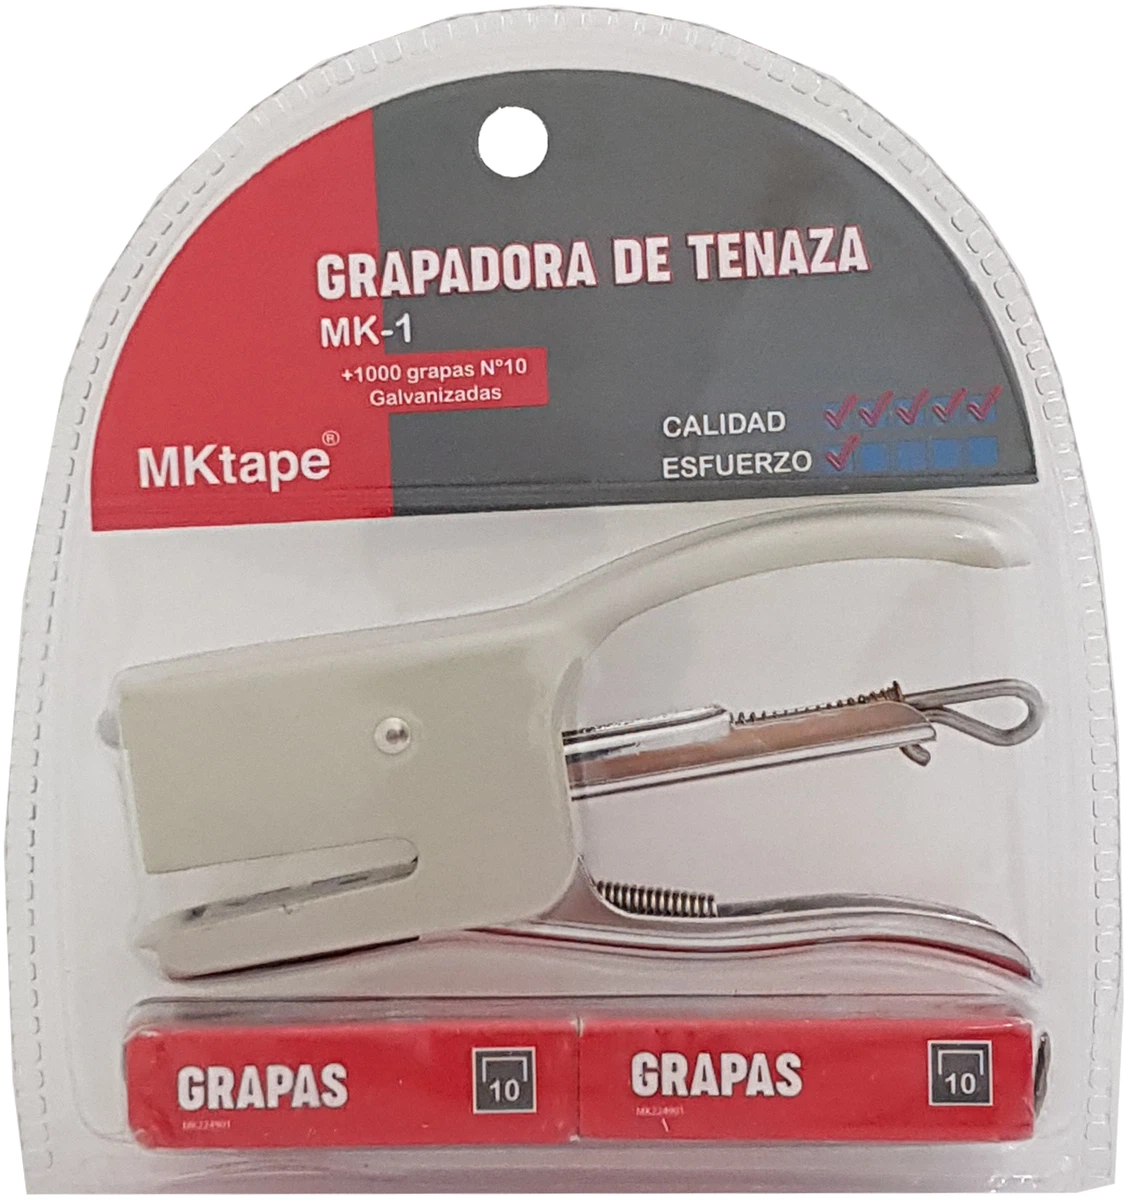 MKtape MK1 Mini Pince Agrafeuse Pack + 1000 Agrafes N°10 - Jusqu'à 12 Feuilles - Couleur Blanche